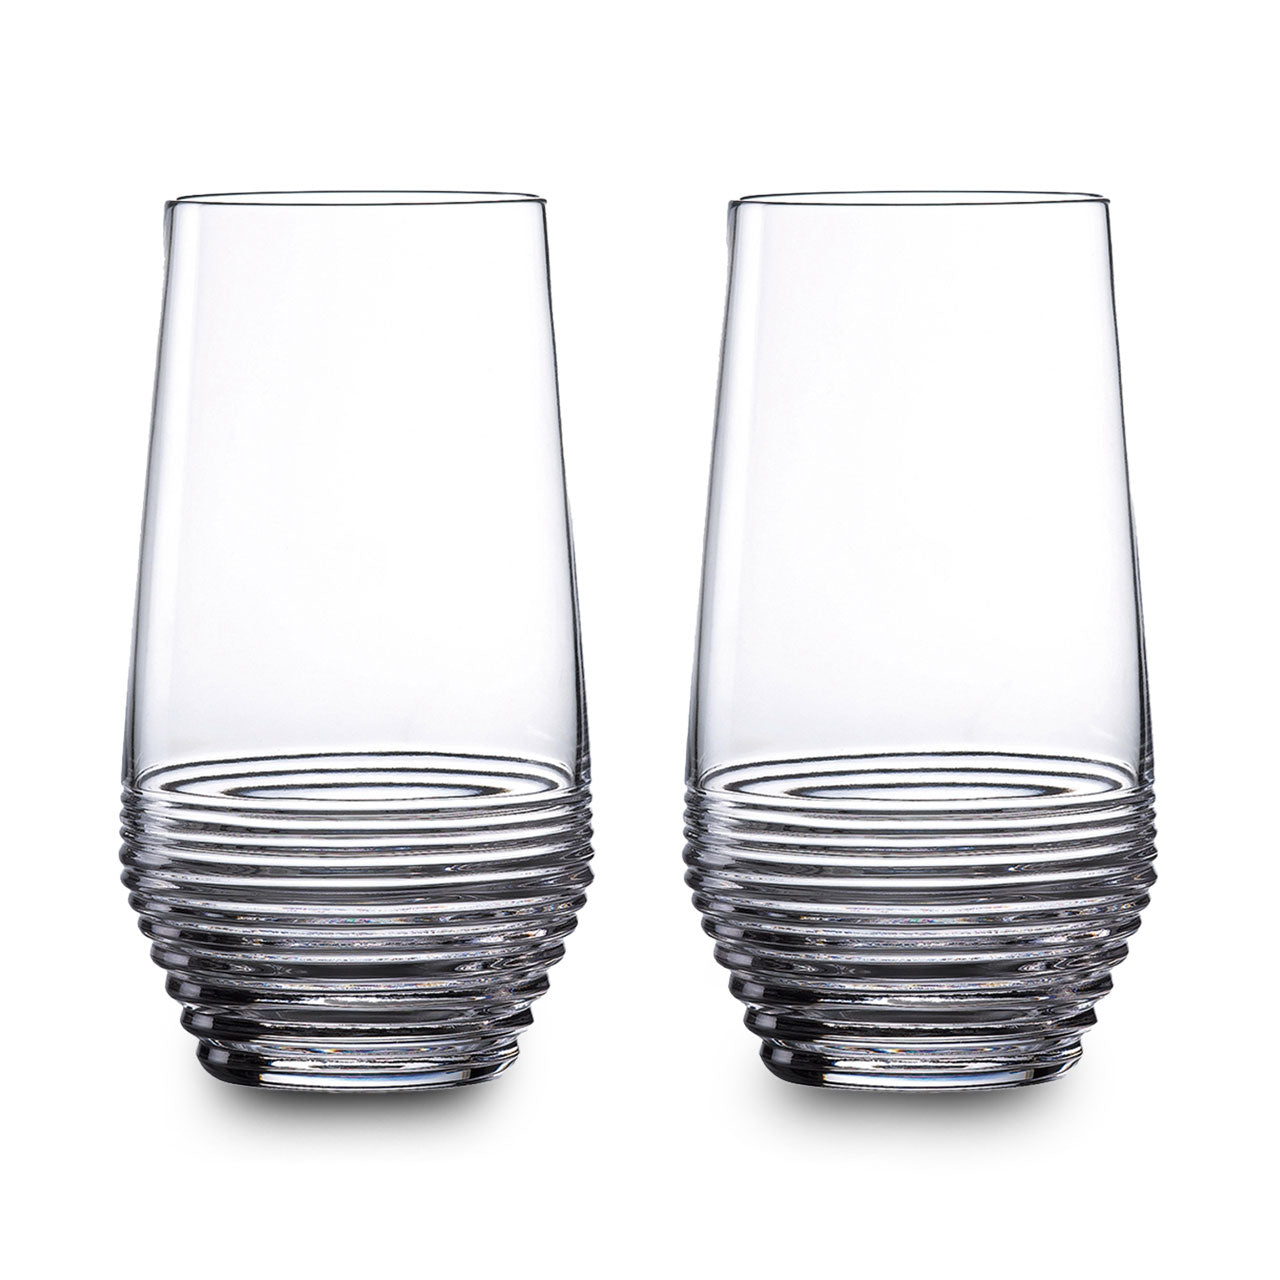 Waterford Crystal Circon Hiball Glasses